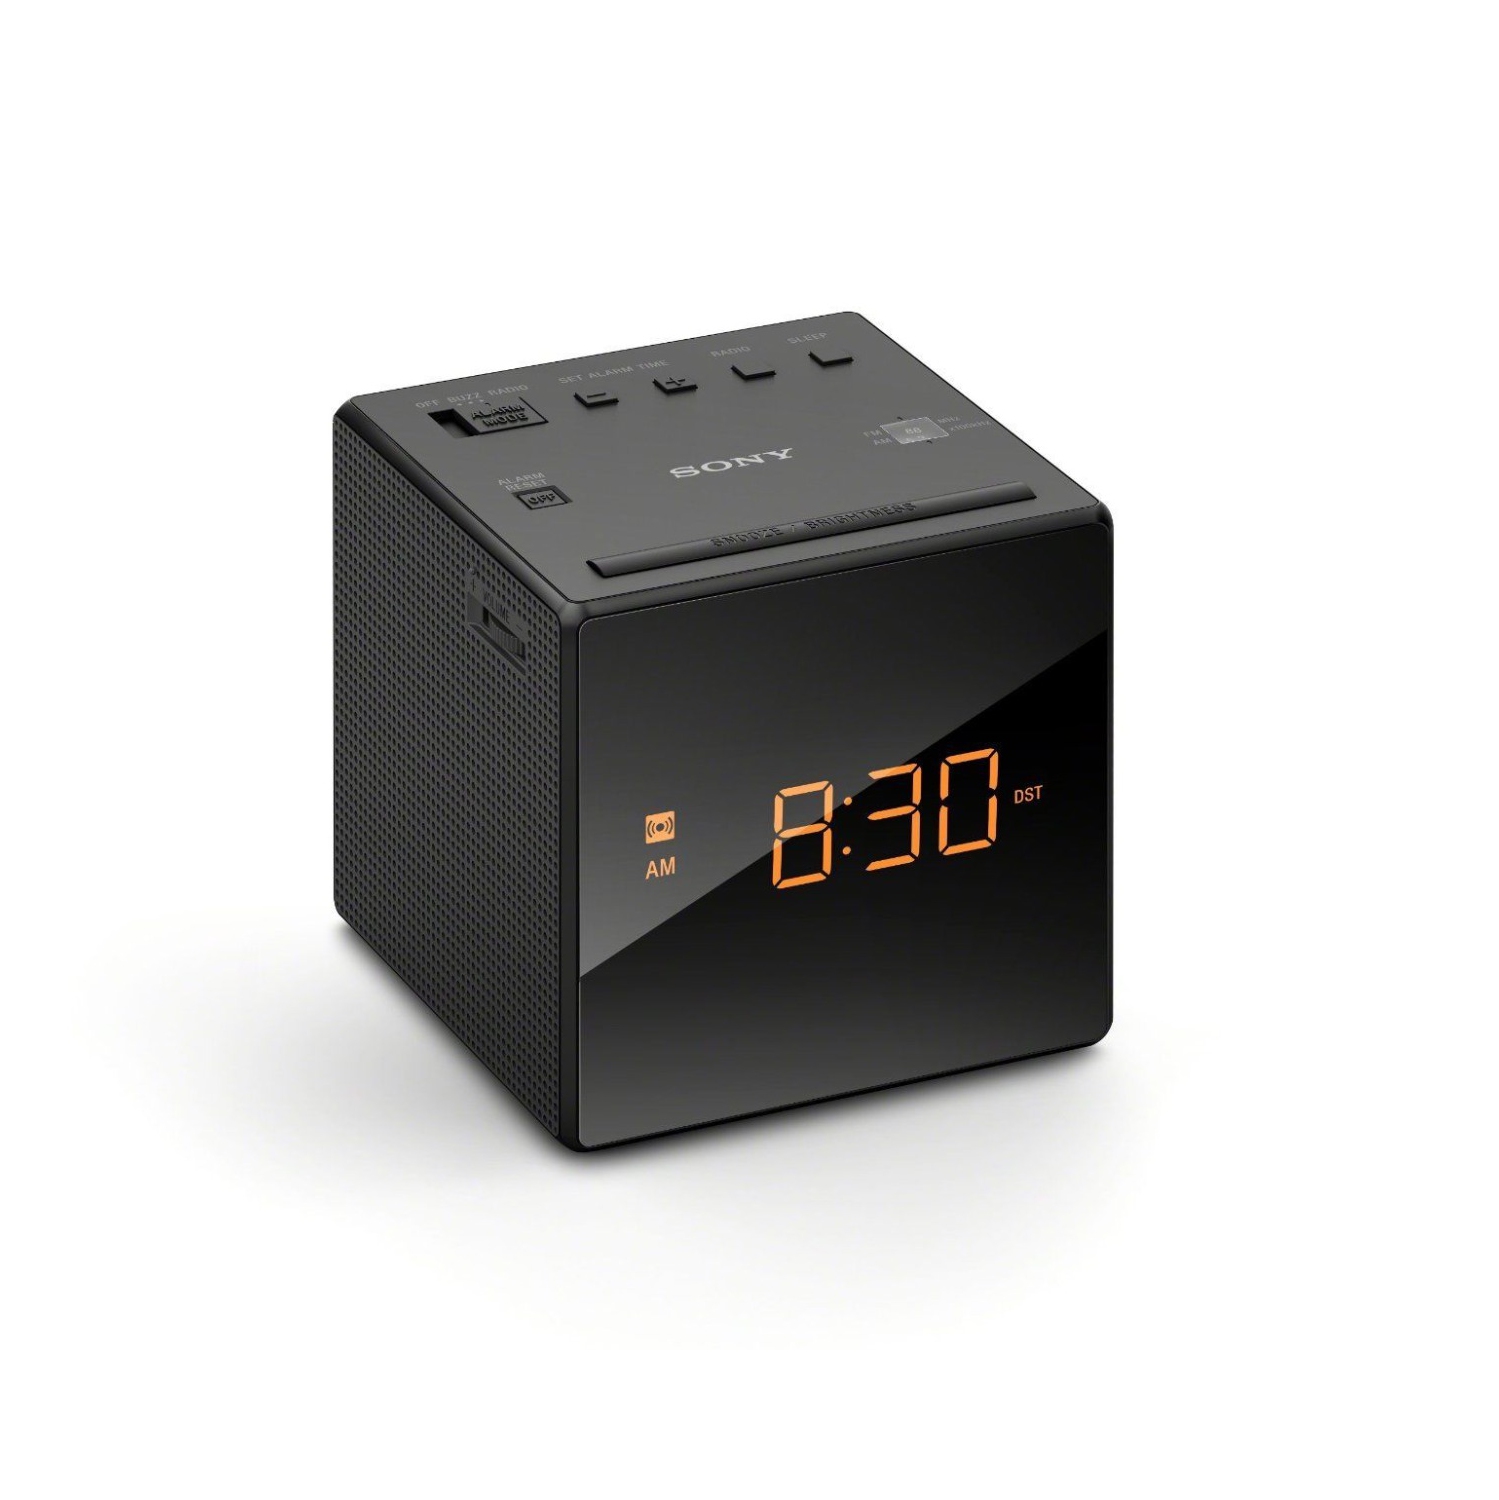 Sony ICF-C1 Digital Am FM Alarm Clock Radio - Black - Open Box